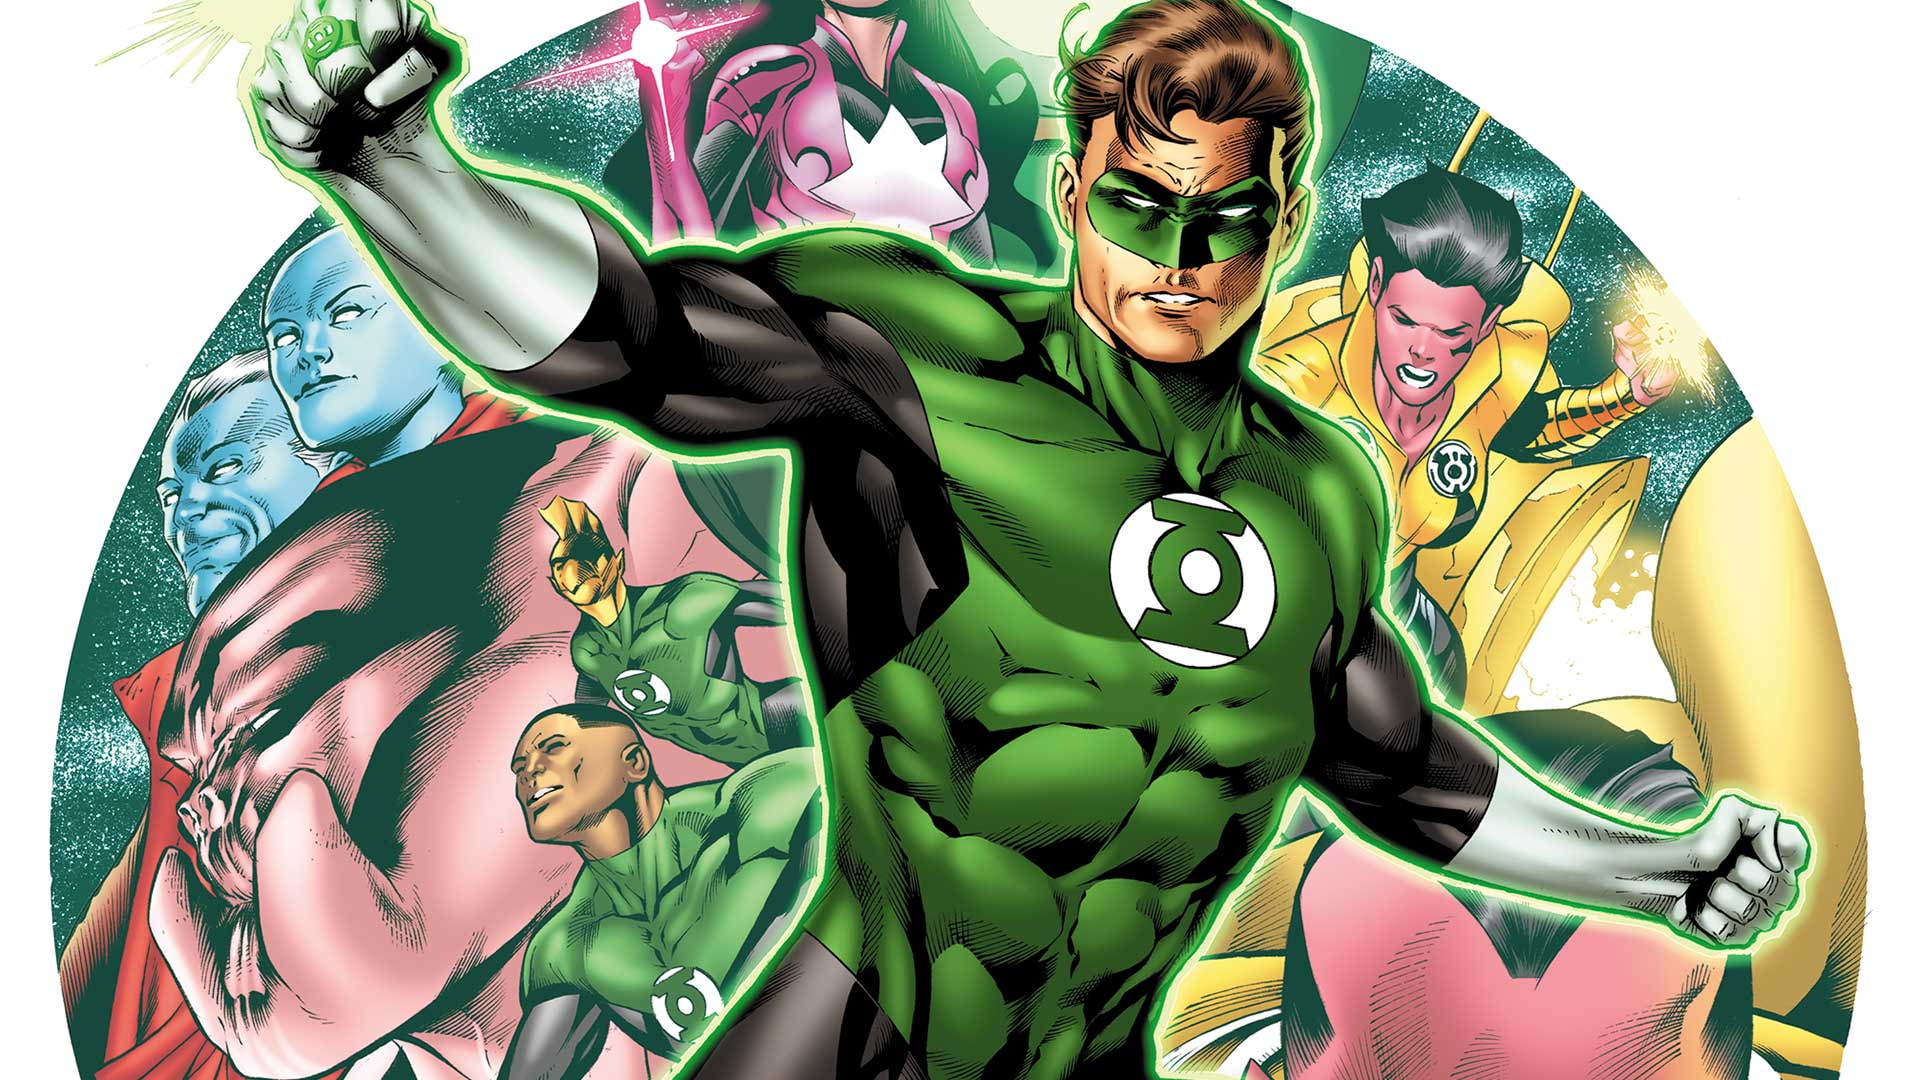 Green Lantern Characters Hal Jordan Injustice 2  Maintenance Green Lantern Ring Mastery Skins Wallpaper Hd For Mobile Phones And Laptops 1920×1080